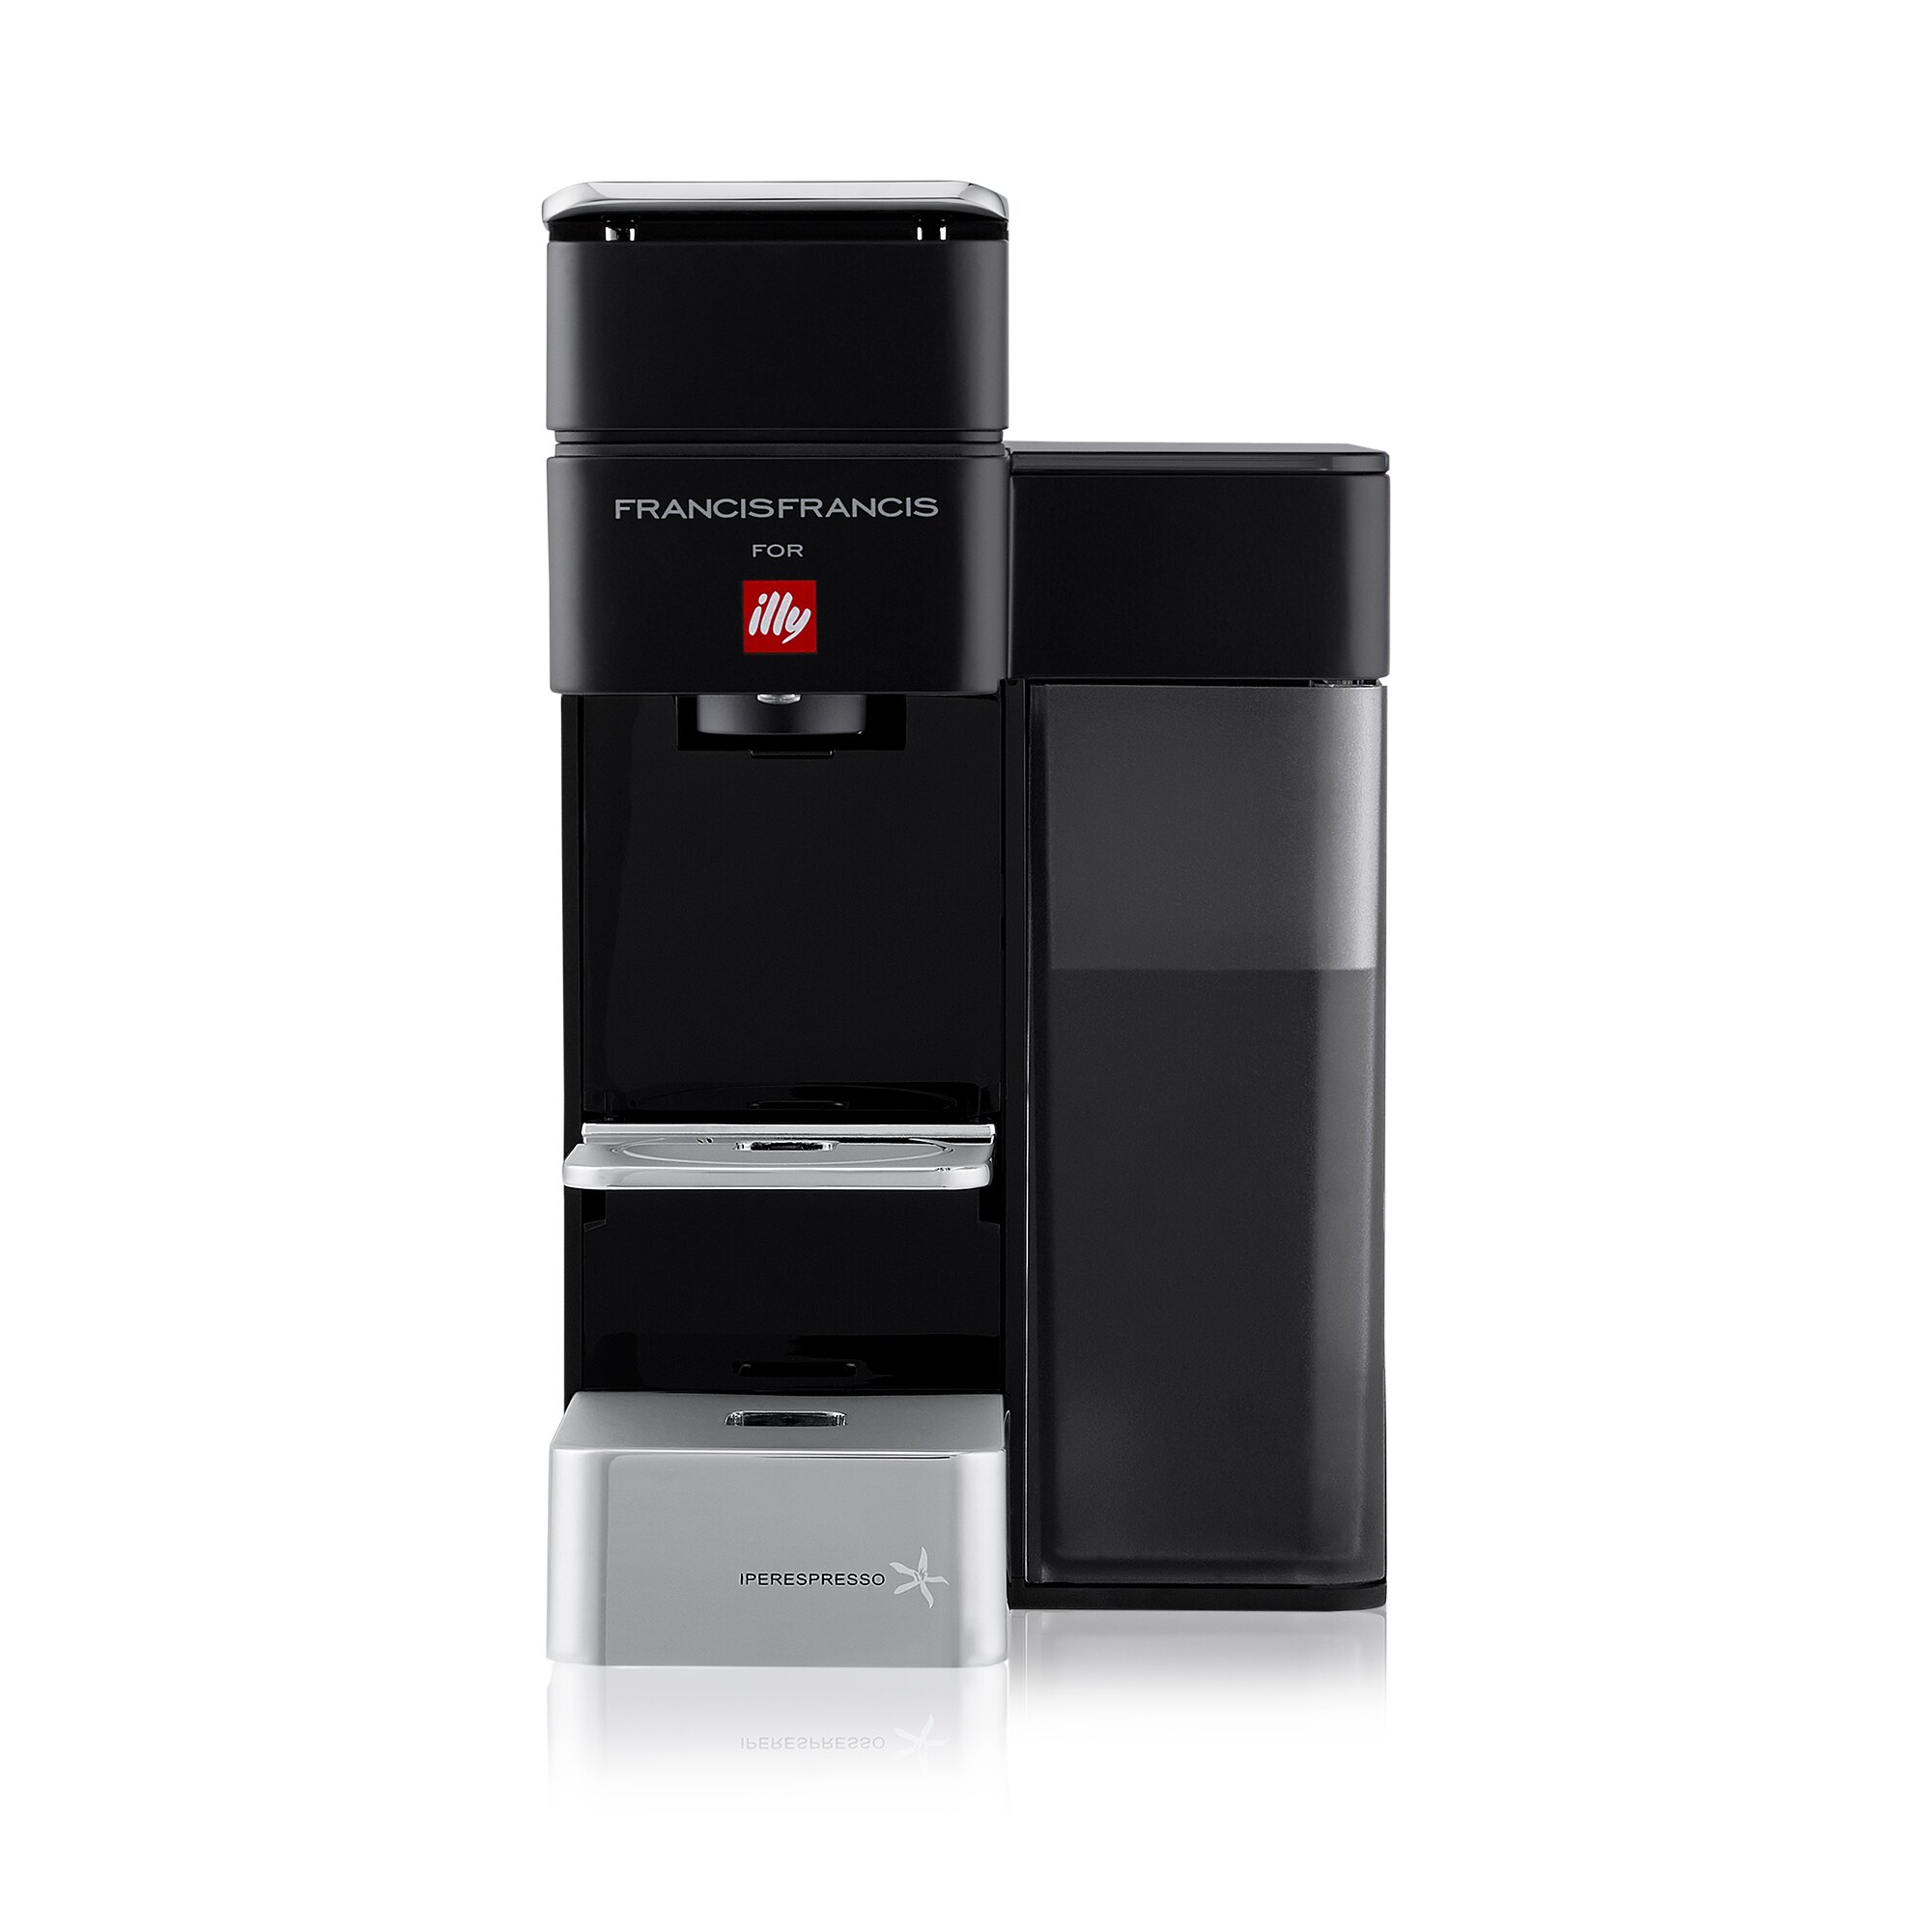 illy Y5 iperEspresso Espresso & Coffee Machine - Black